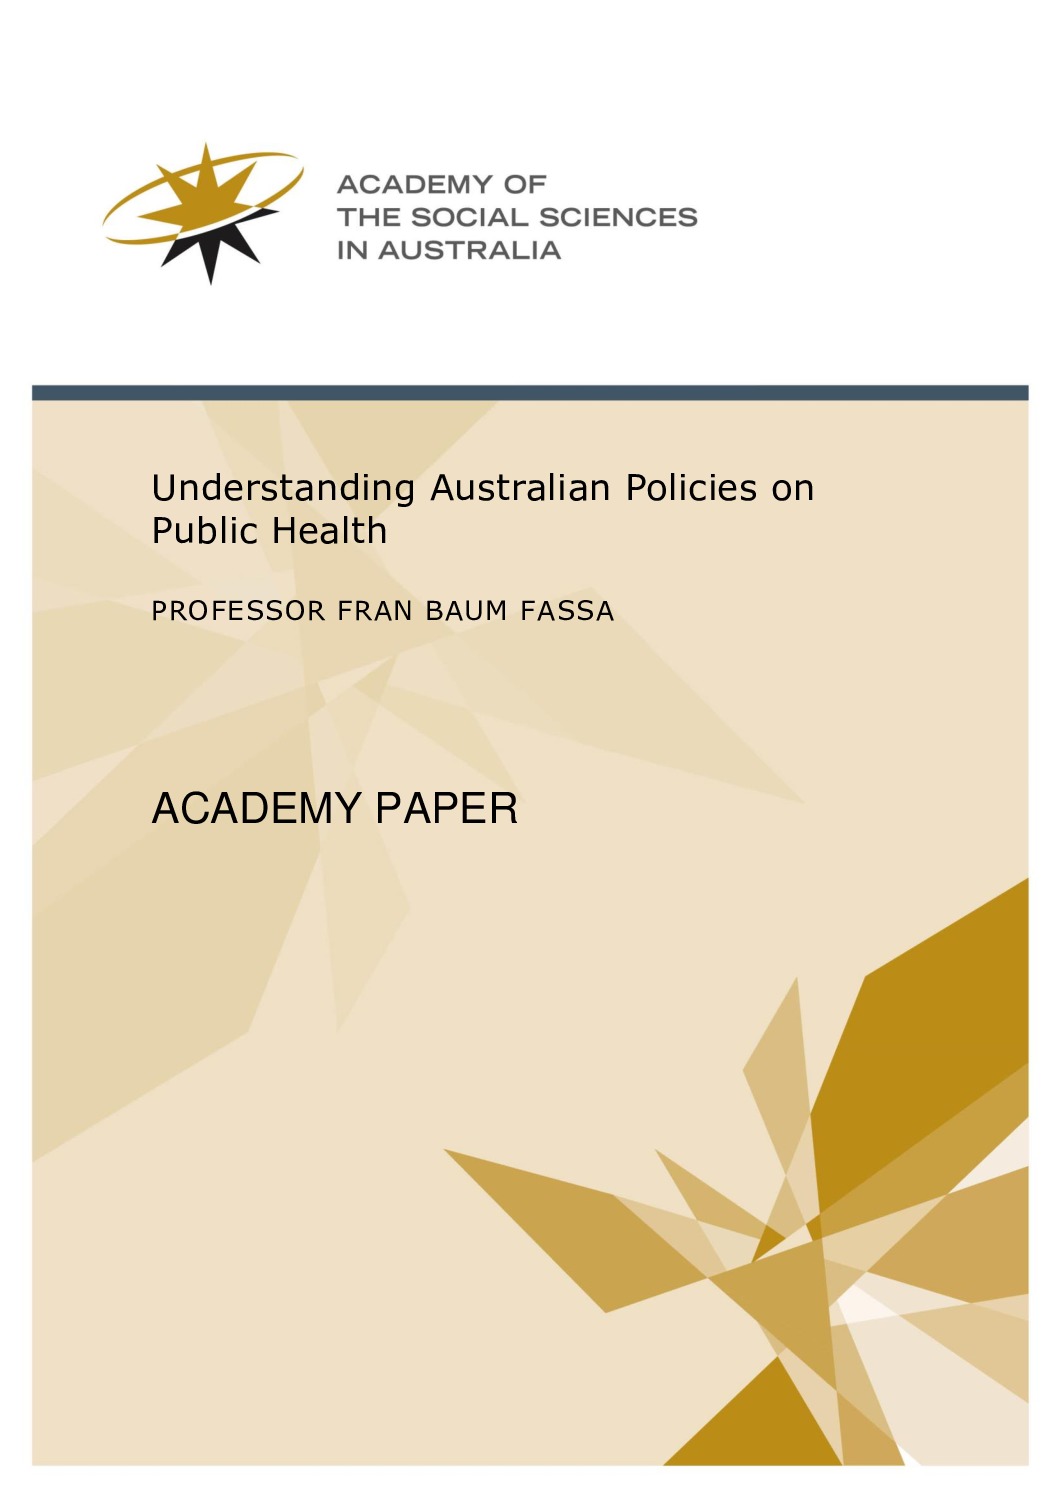 Academy Paper 3 2016 Final pdf 1